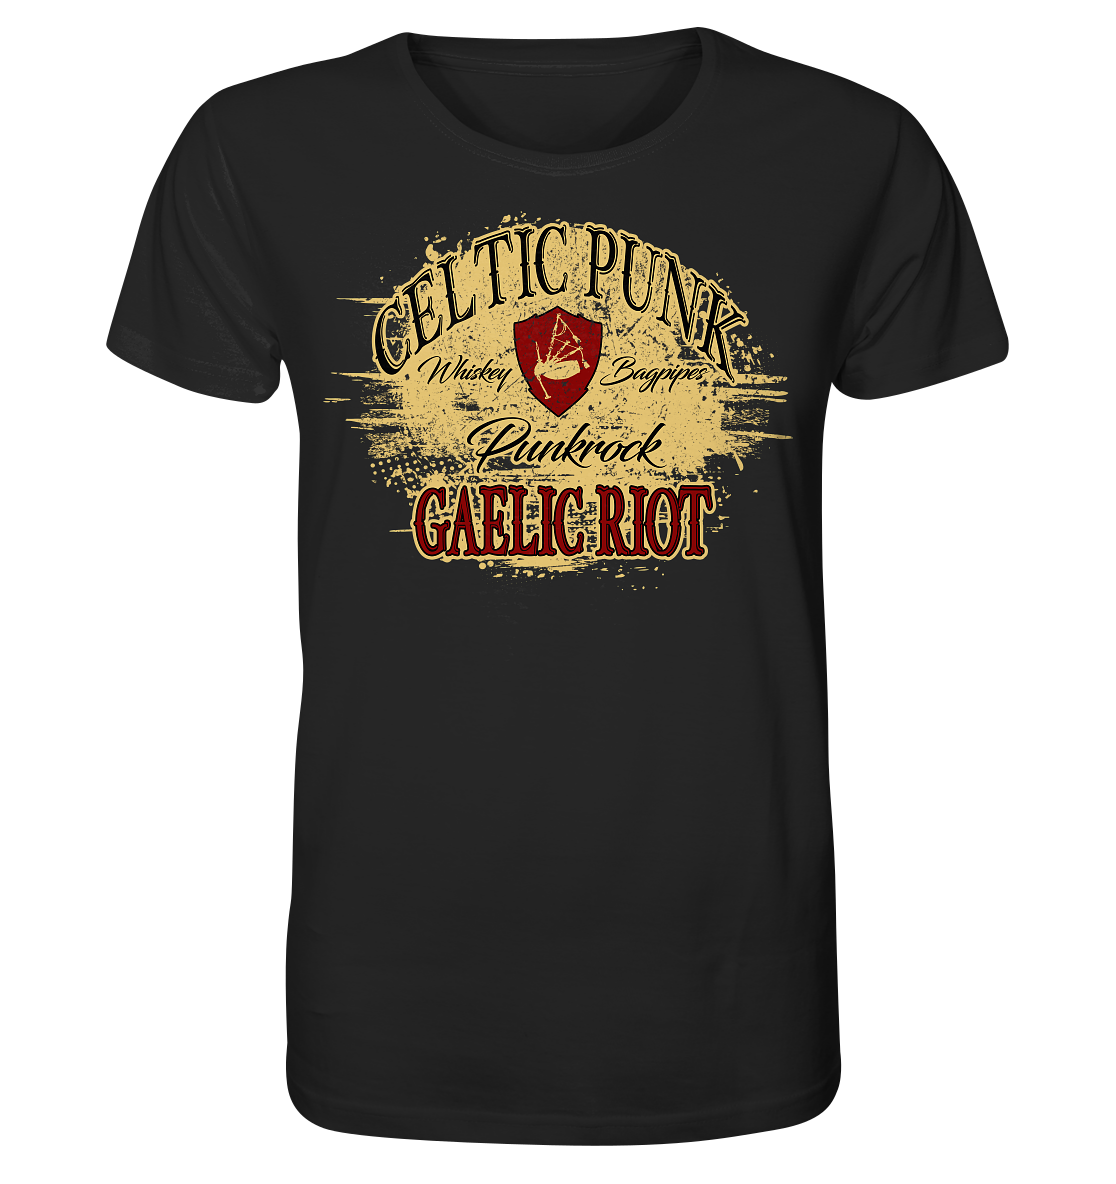 Celtic Punk "Gaelic Riot" - Organic Shirt